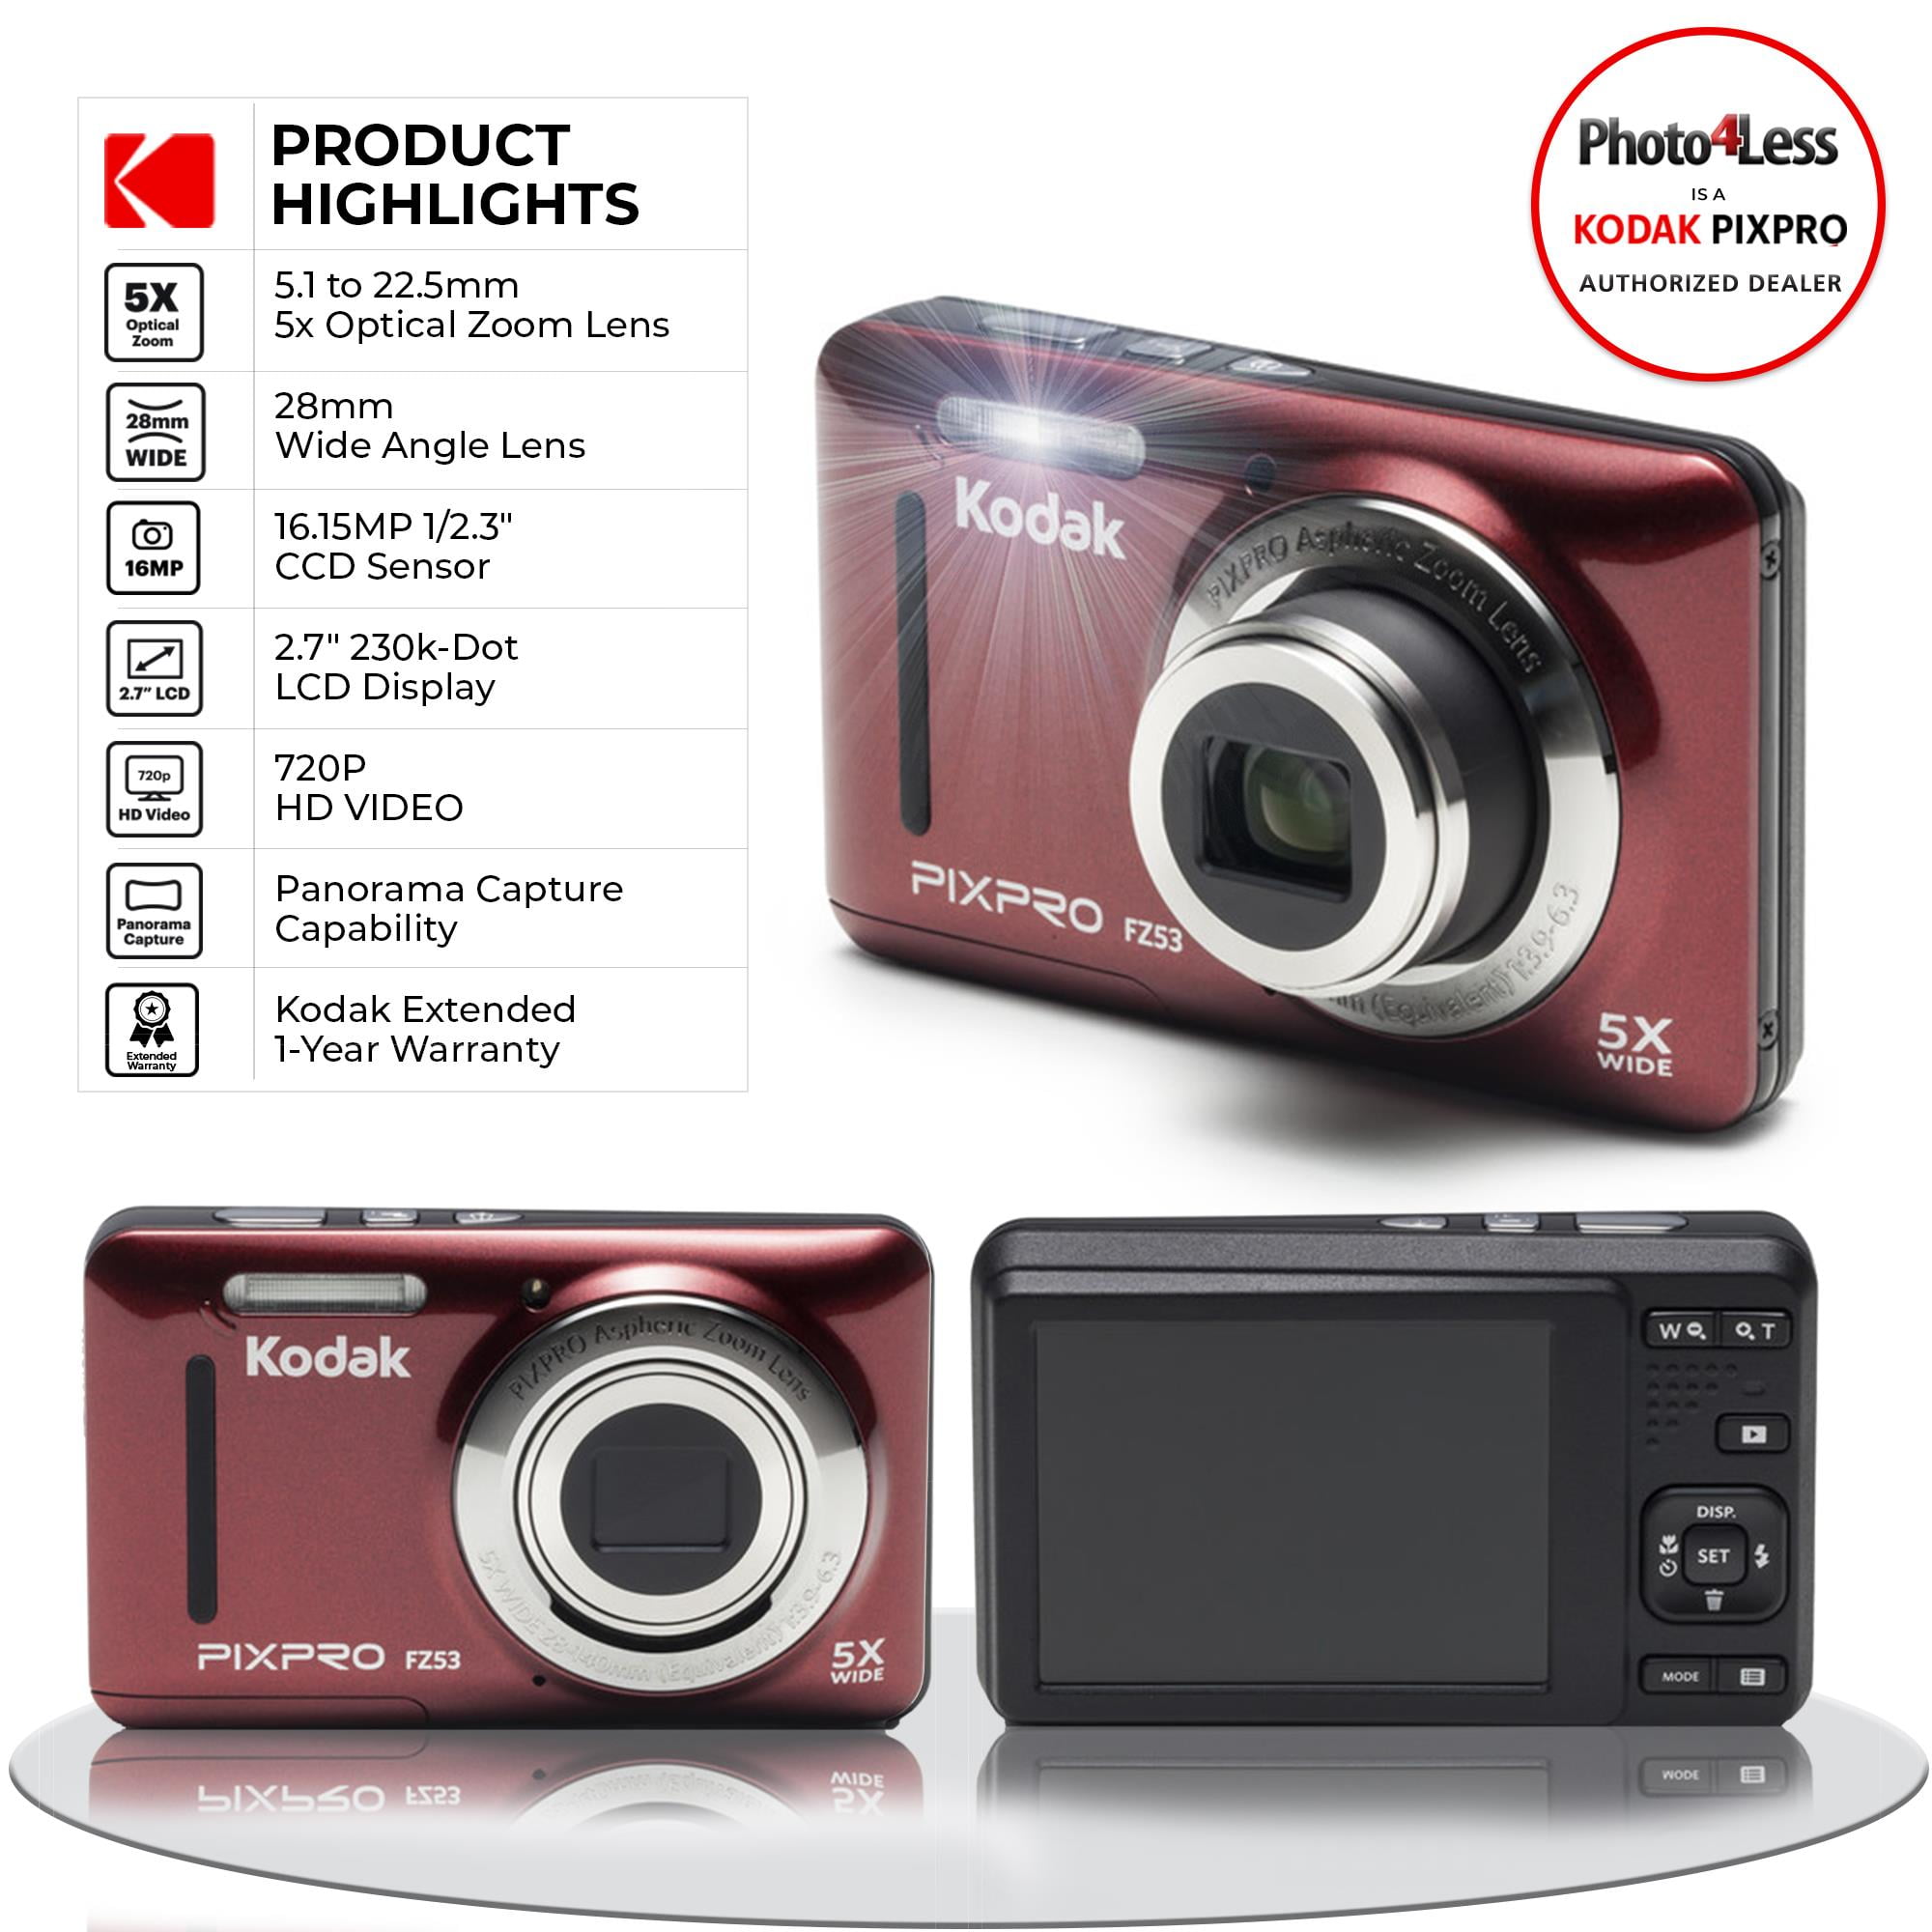  LTGEM Camera Case for Kodak PIXPRO Friendly Zoom FZ41/FZ43/FZ45/FZ53/FZ55  Digital Camera - Storage Travel Protective Carrying Bag for Digital Camera(Grey)  : Electronics